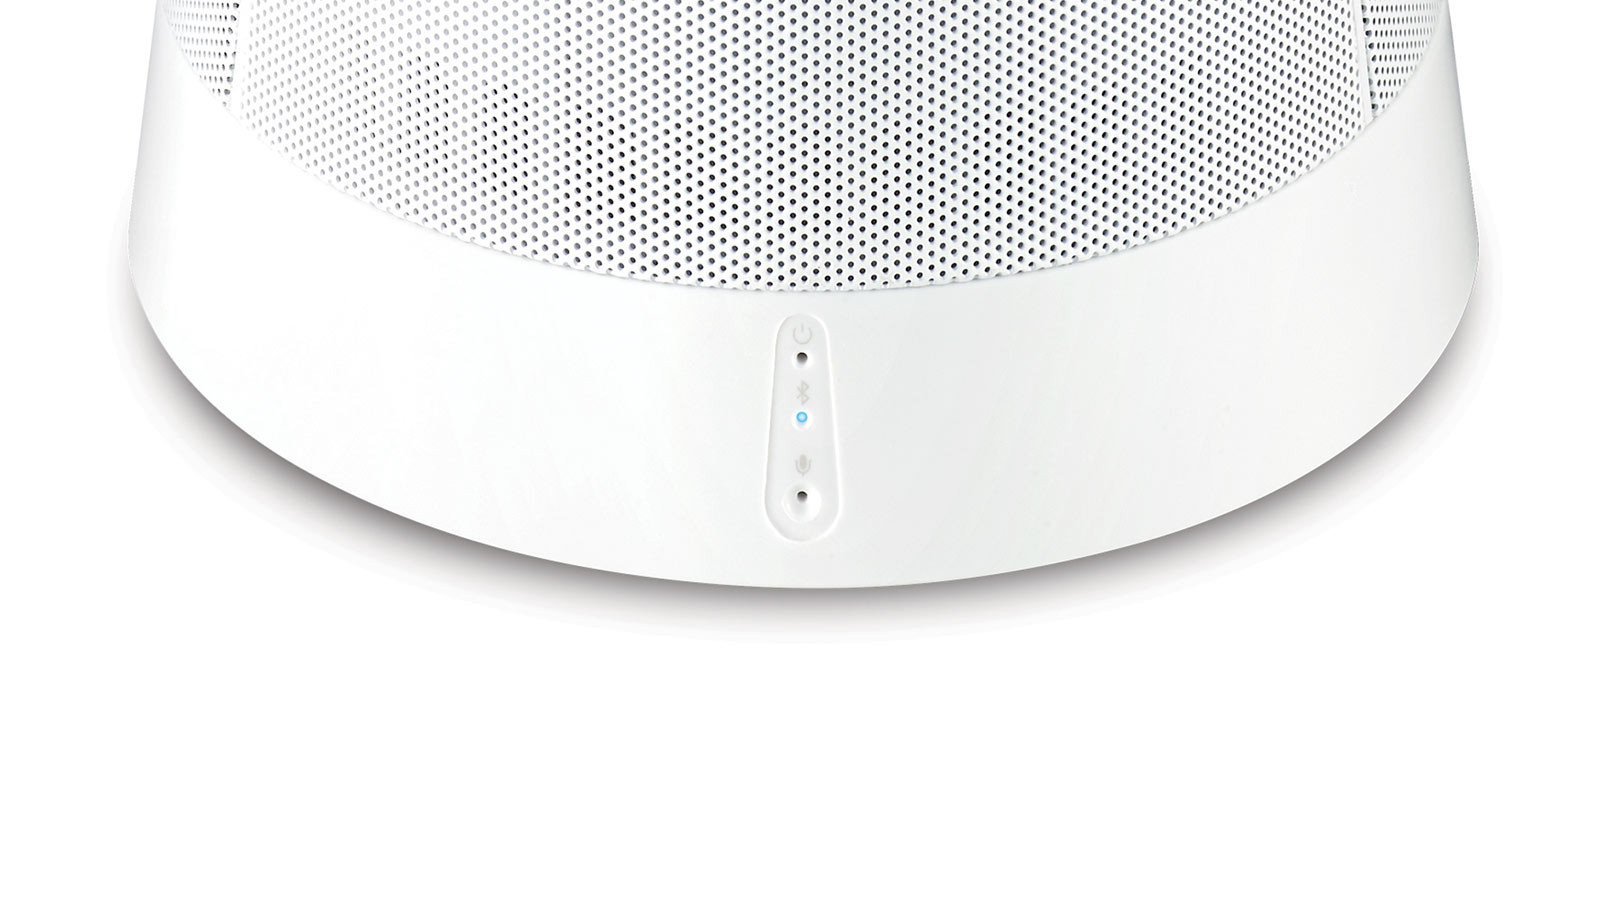 Bluetooth speaker design senant